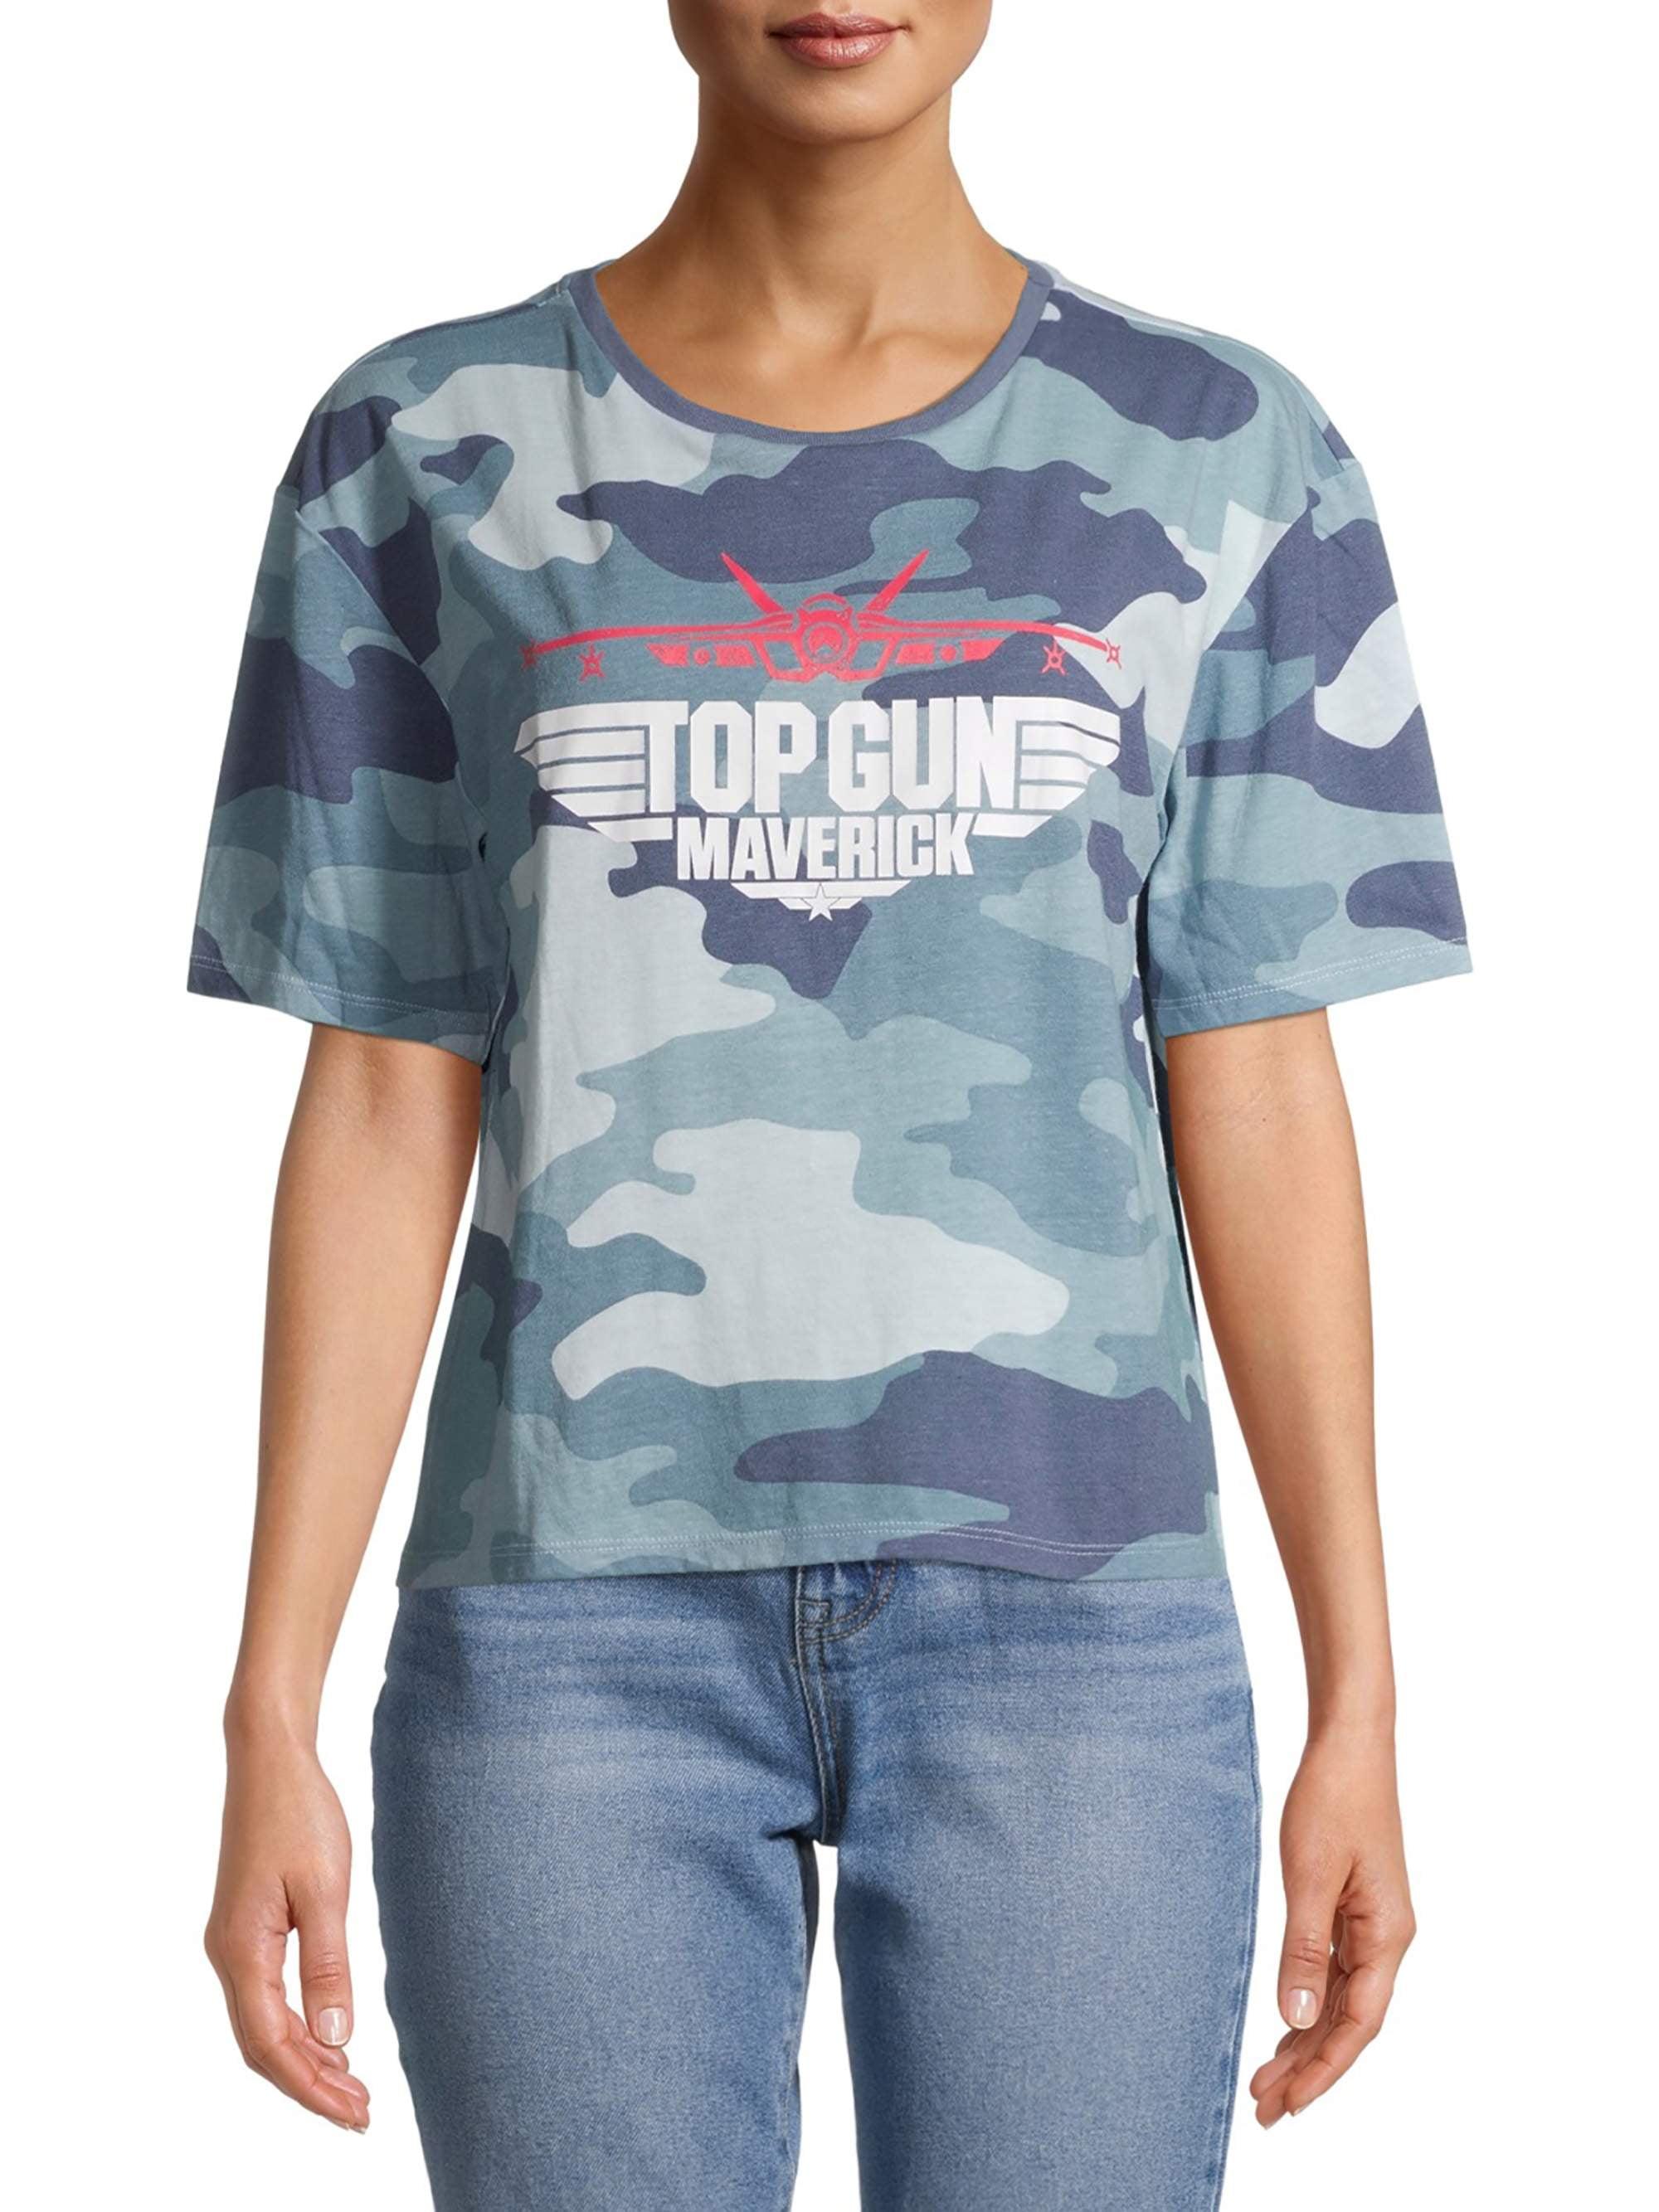 Top Gun Maverick Women's Camo T-Shirt